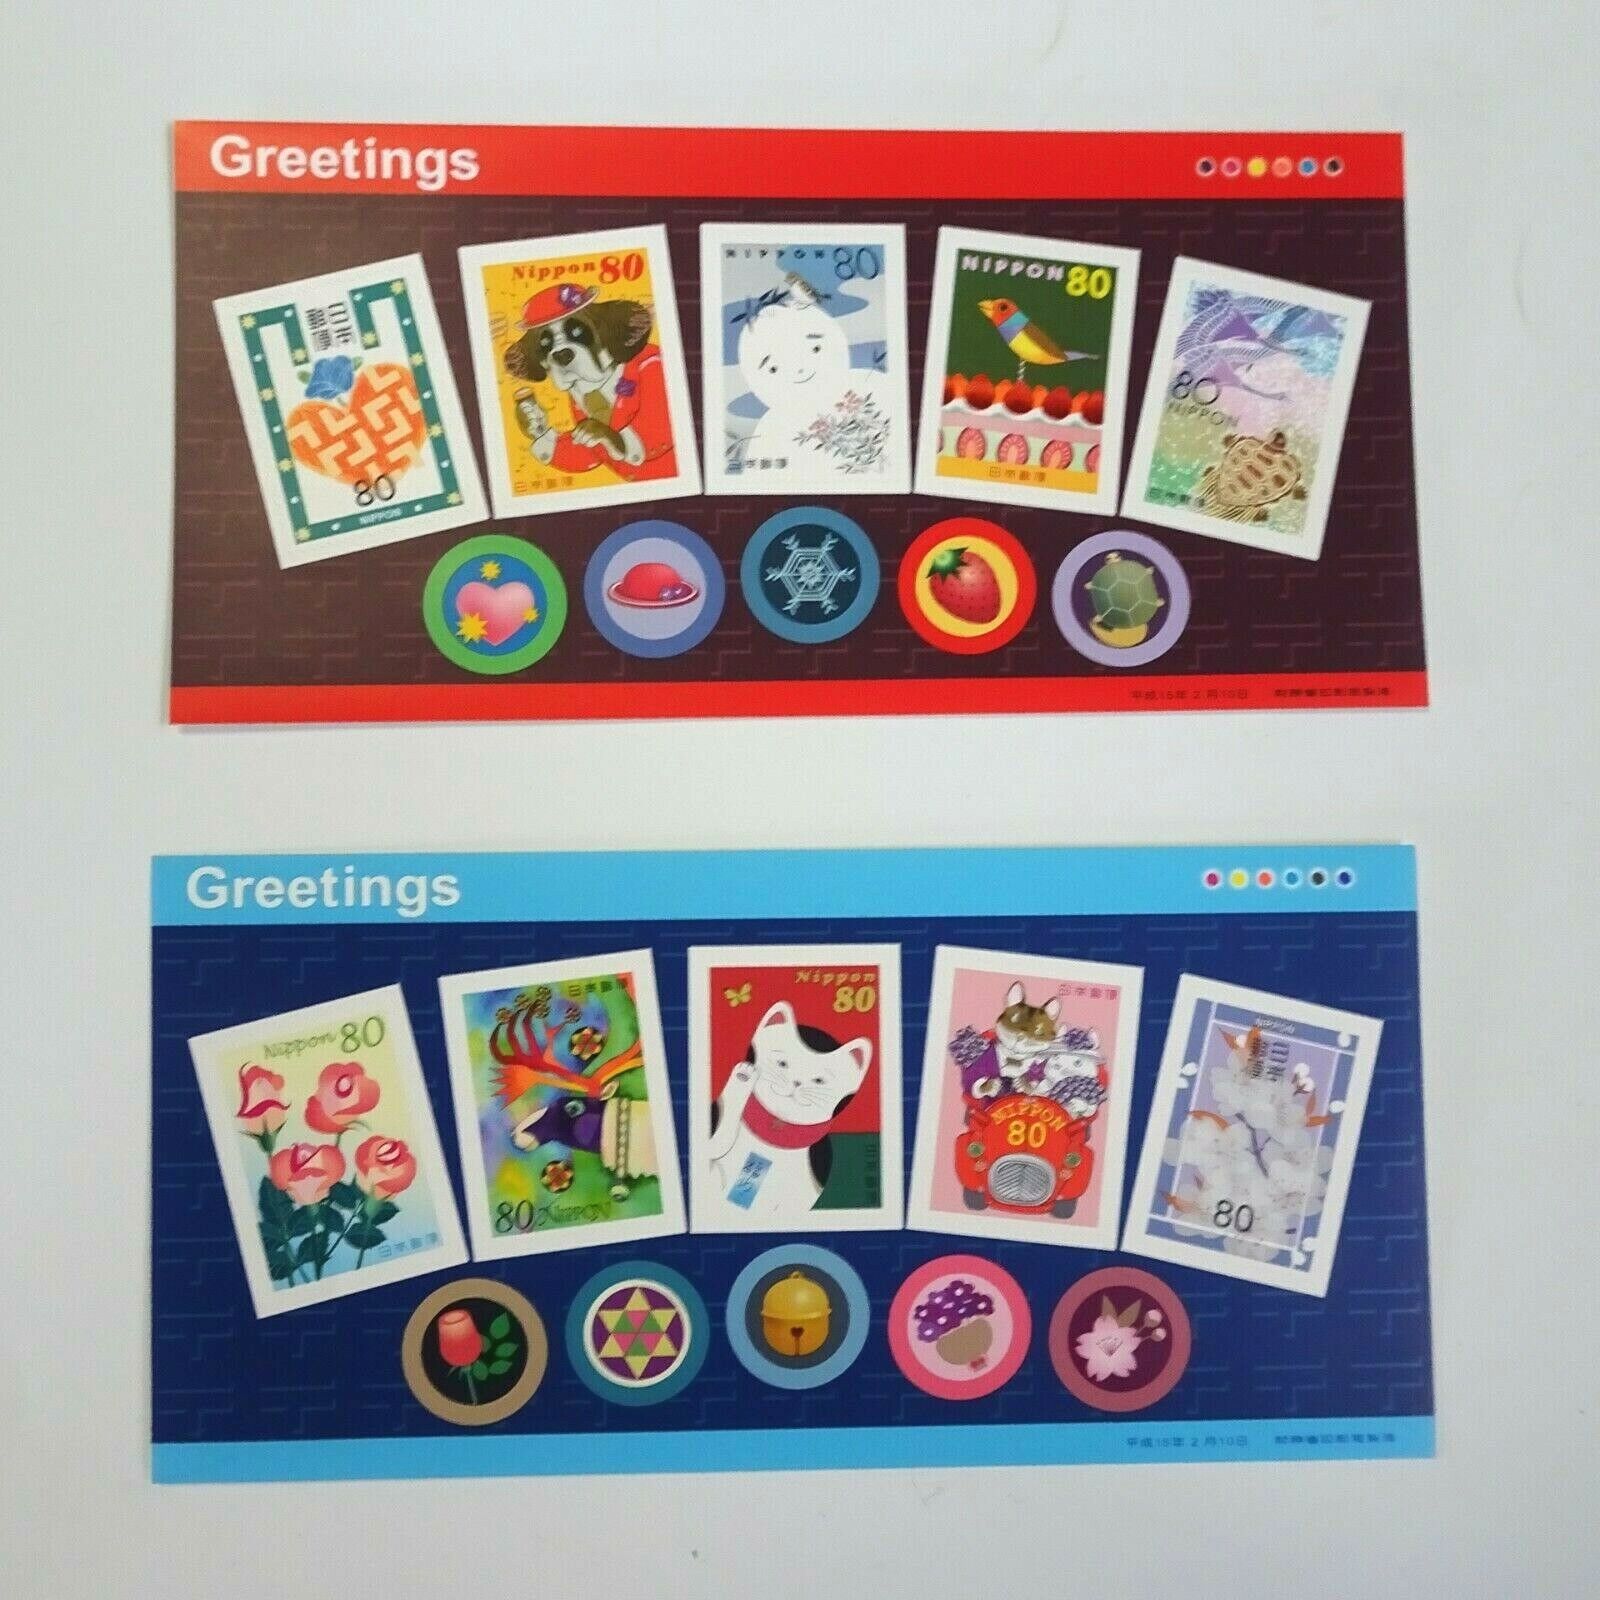 Greetings 2003 Seal Stamp Sheet 80 JPY x 5 Lot of 2 dog cat bird flower snowman Без бренда